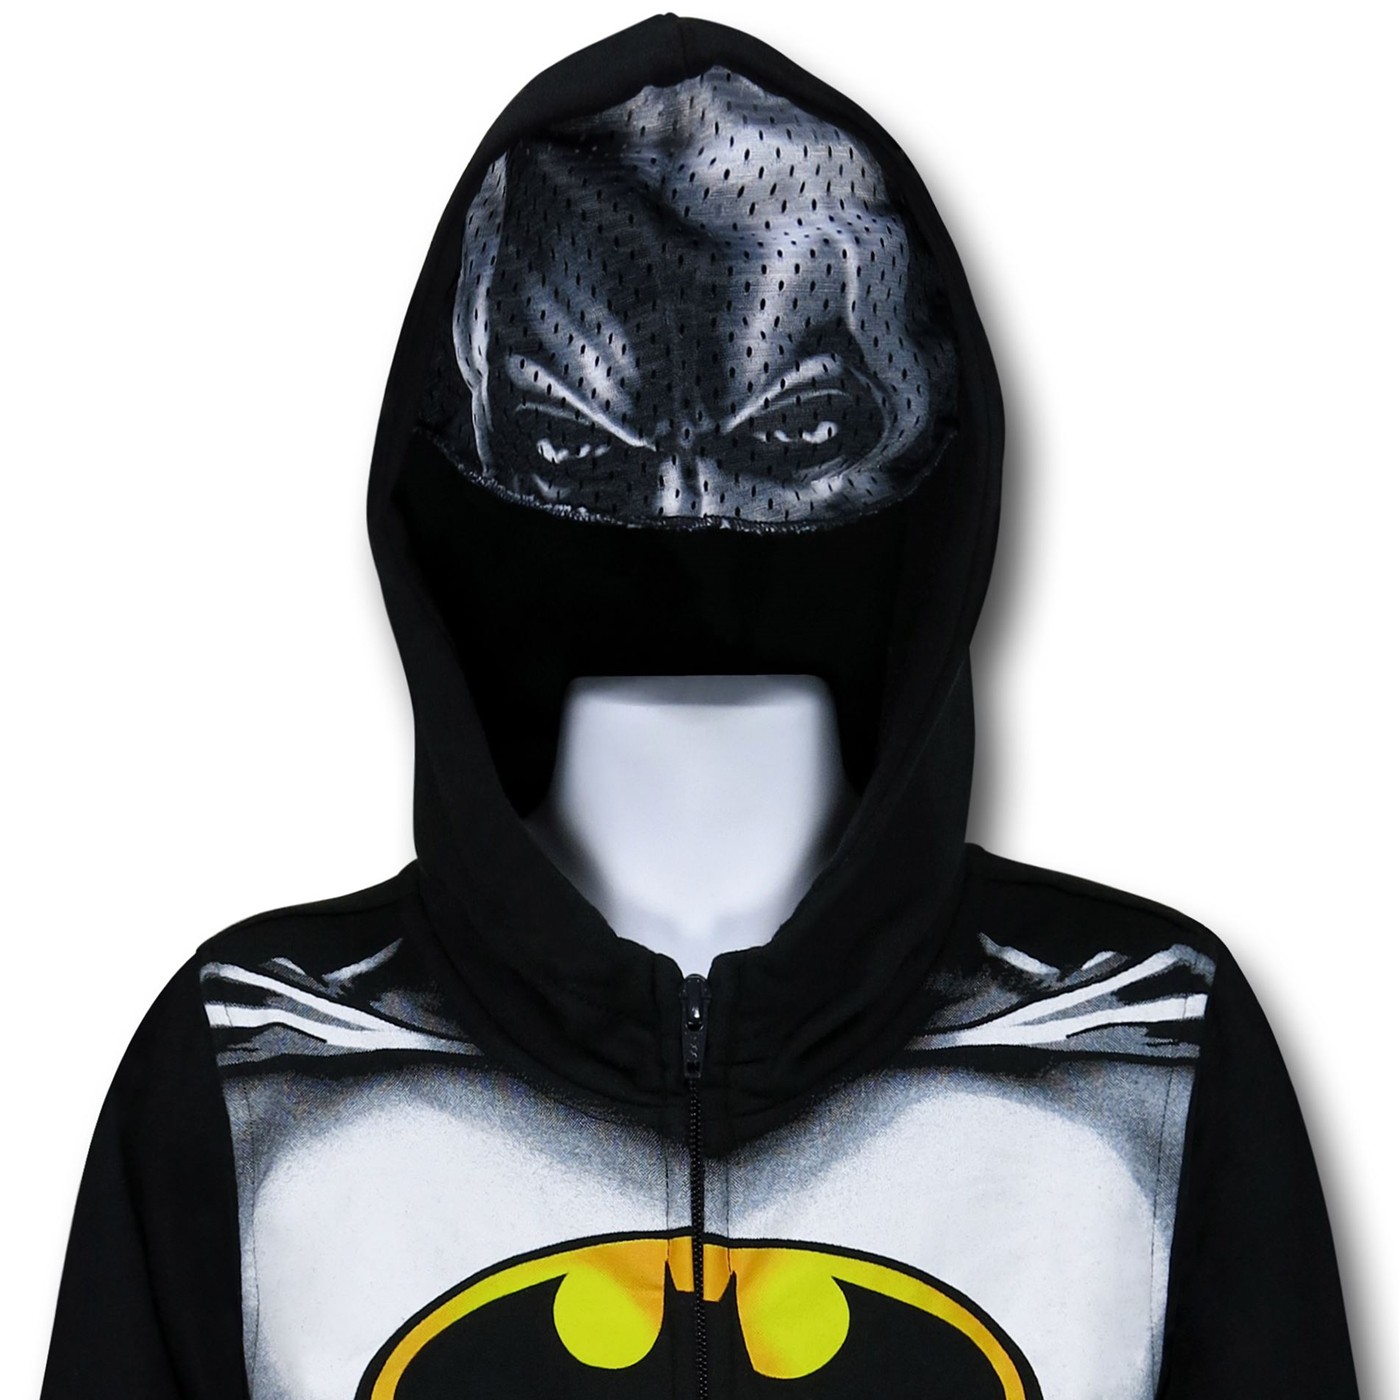 Batman Kids Costume Hoodie with Mask